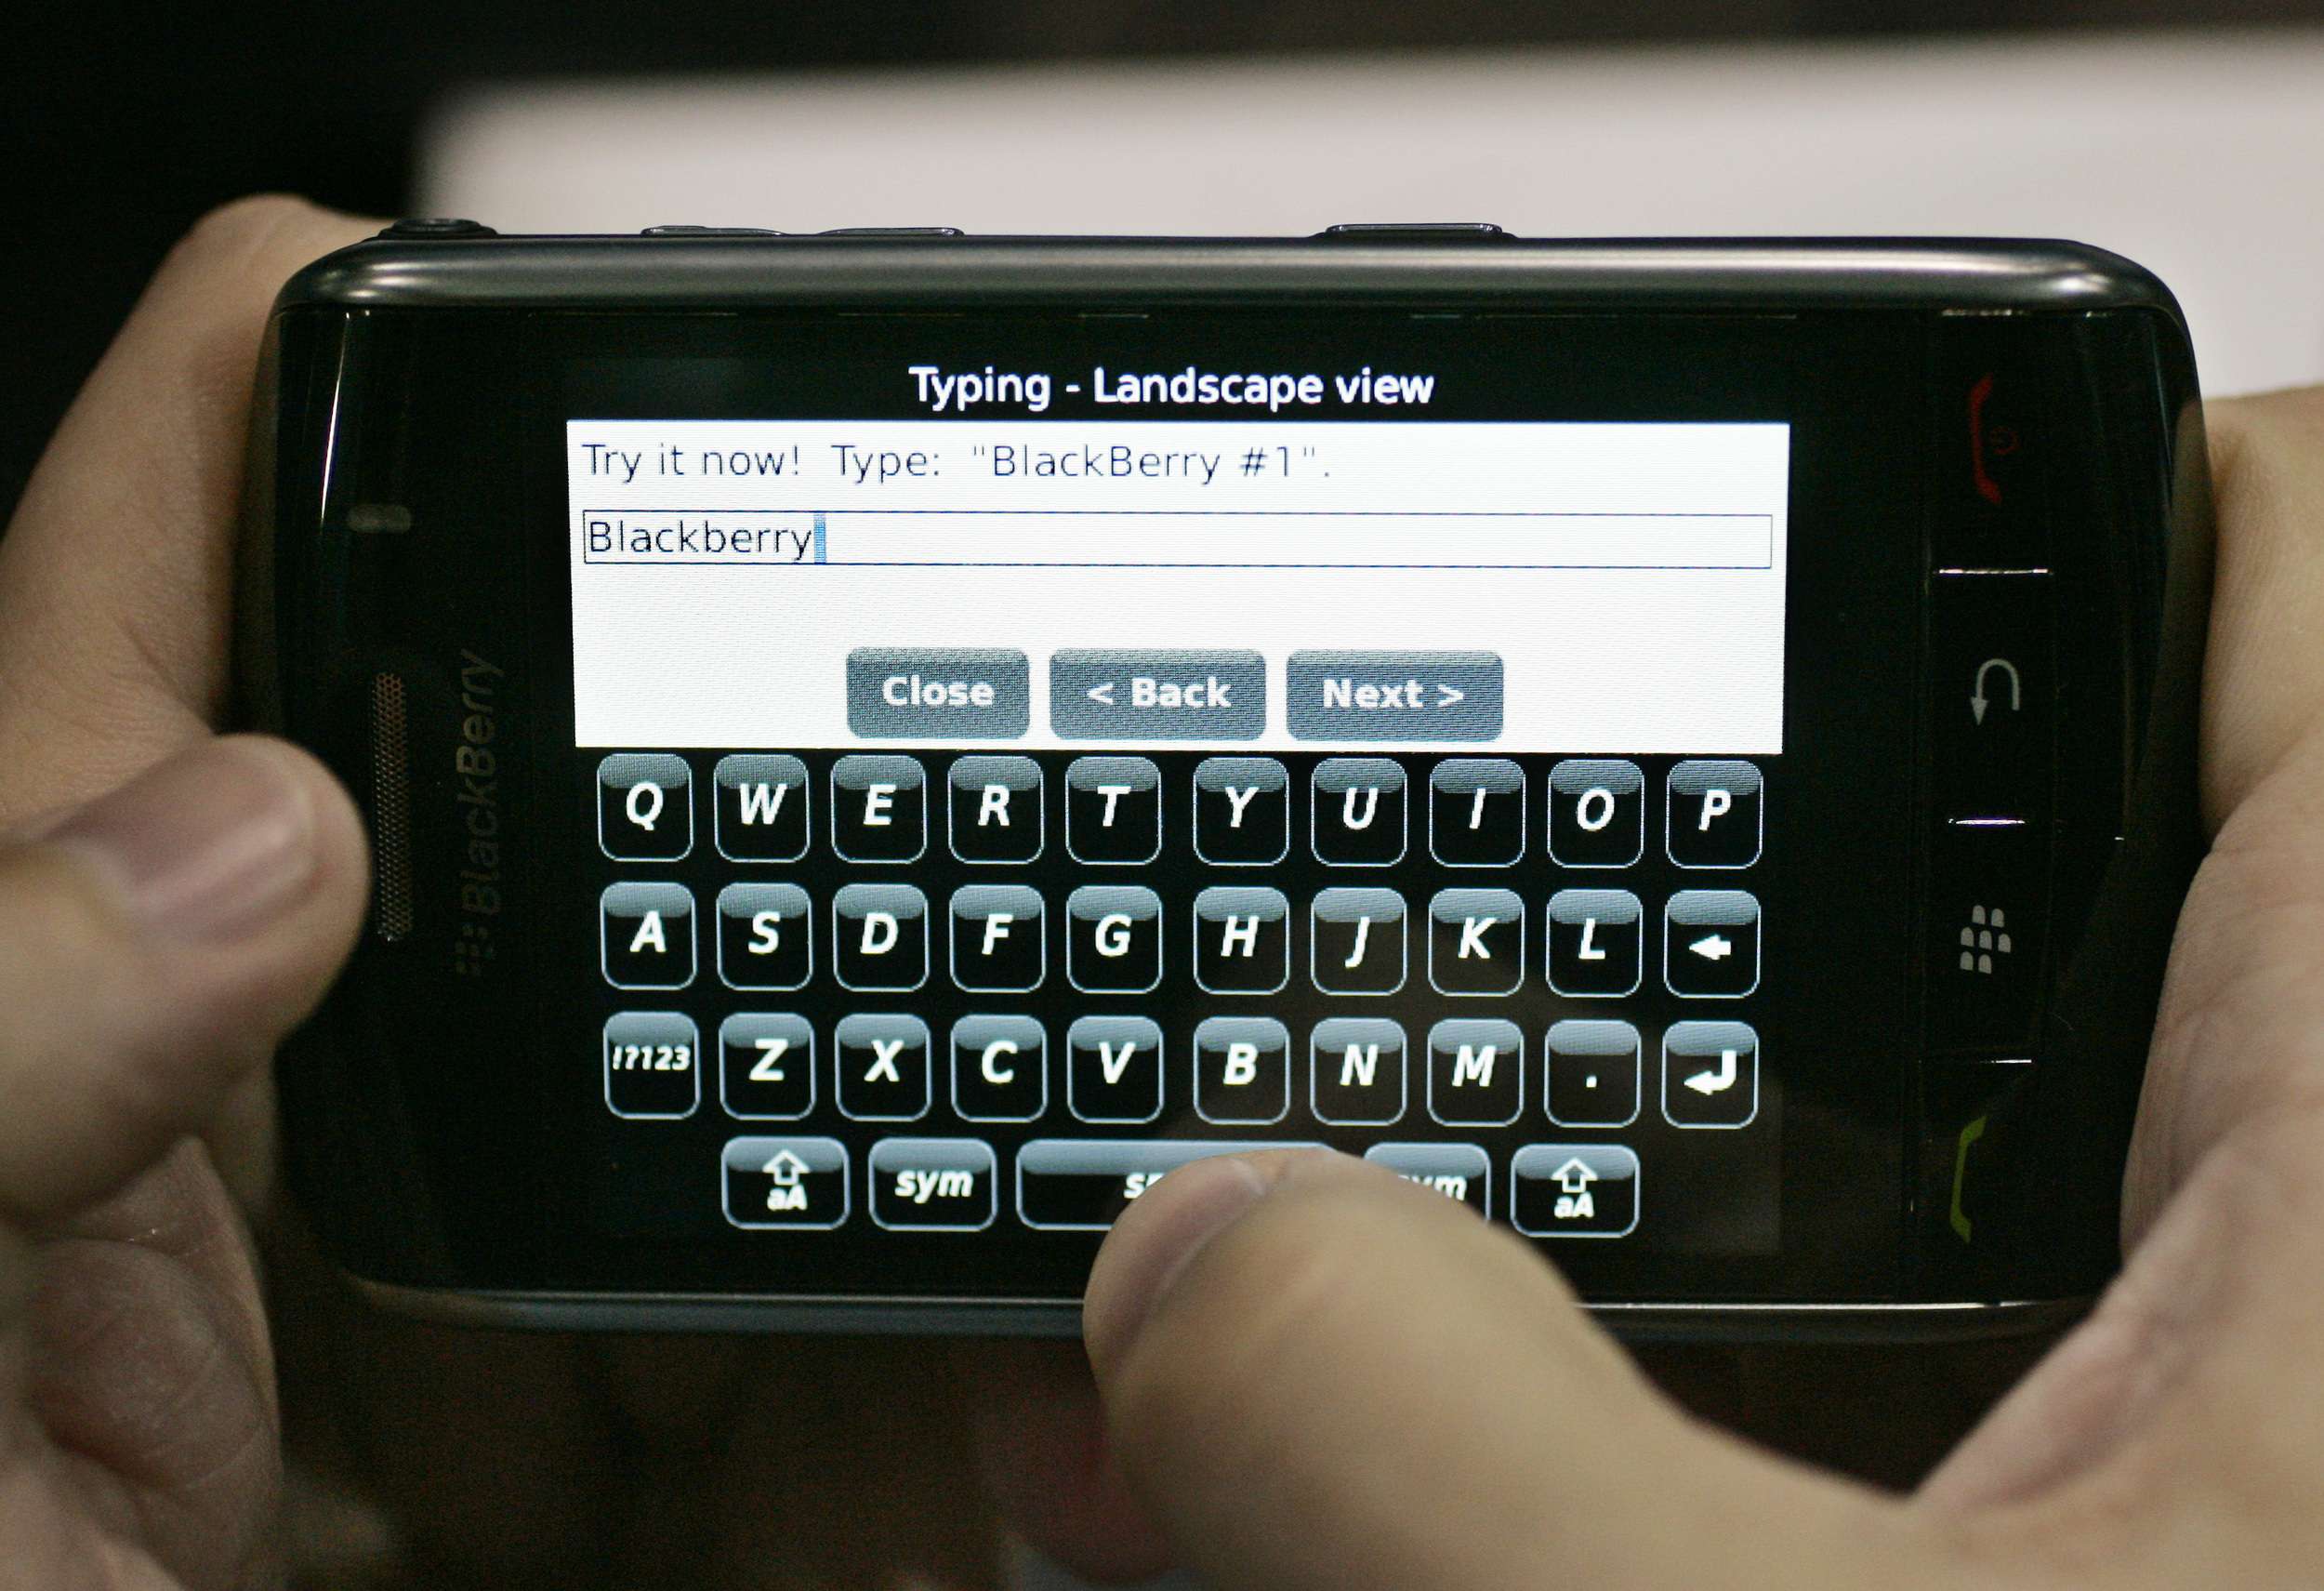 BlackBerry Smart Phone